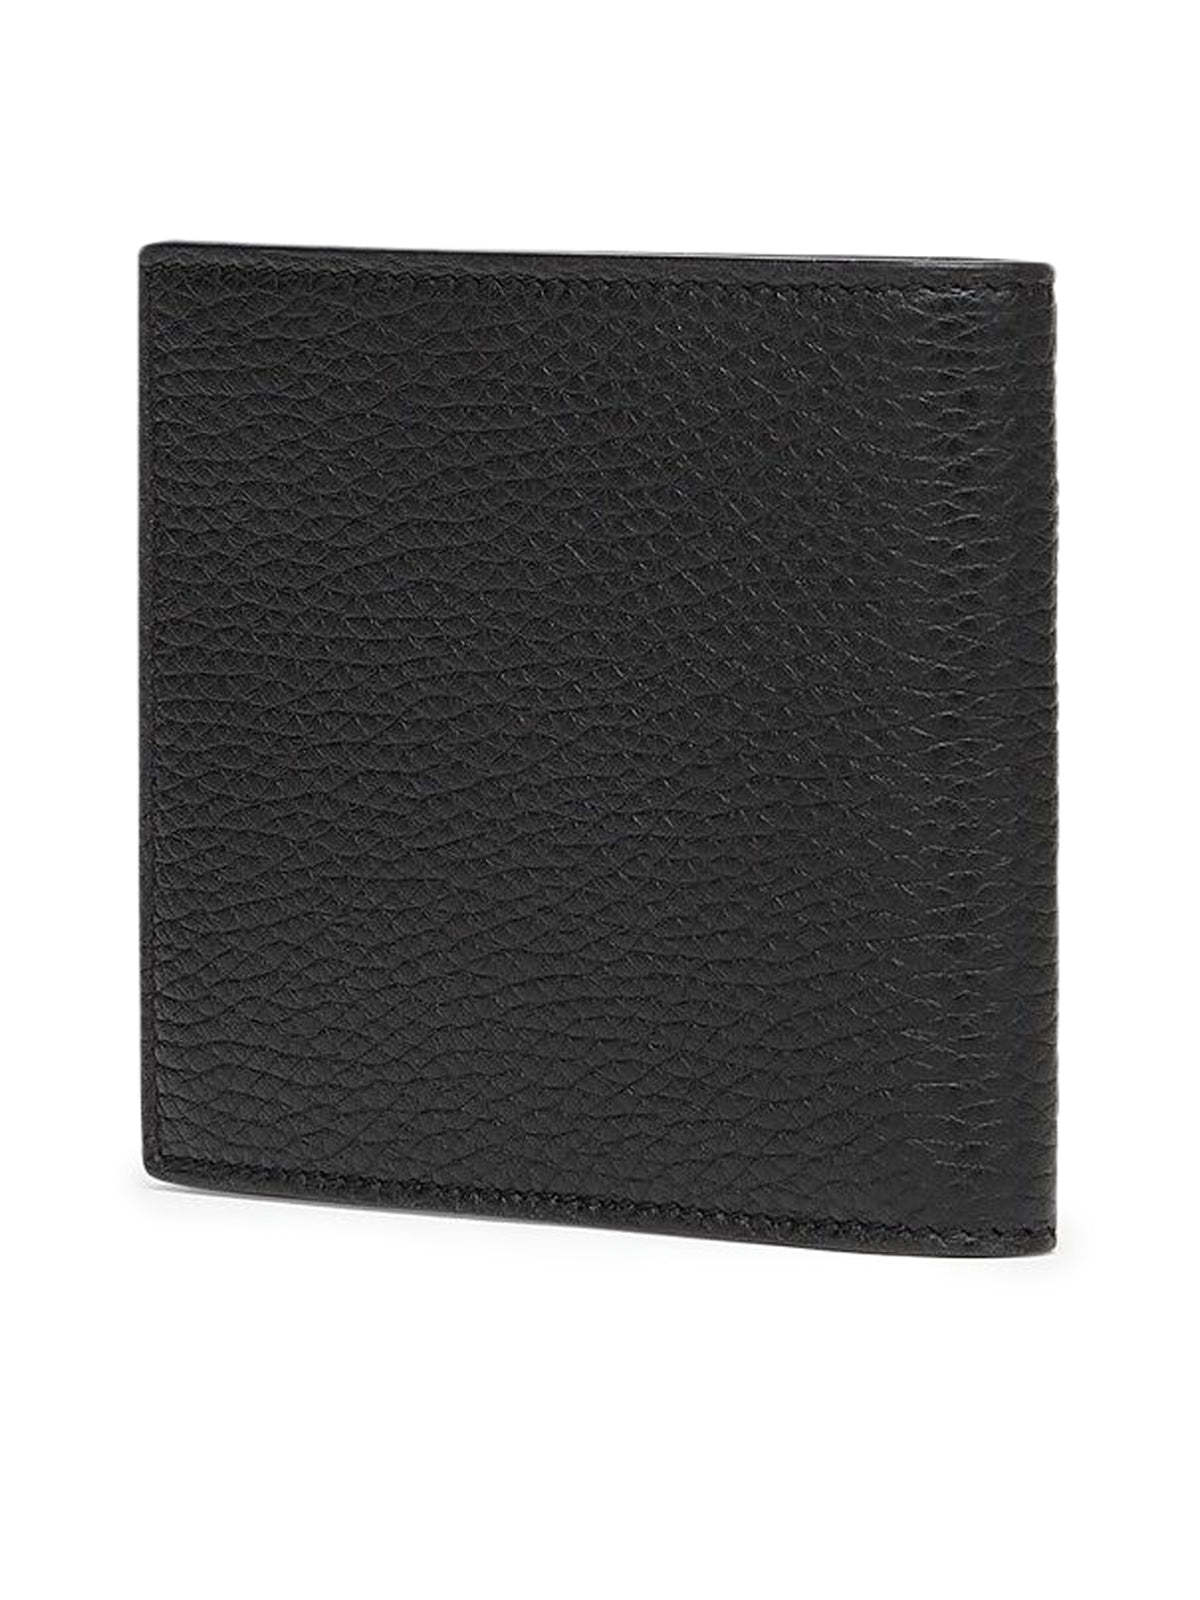 Bi-fold in black leather